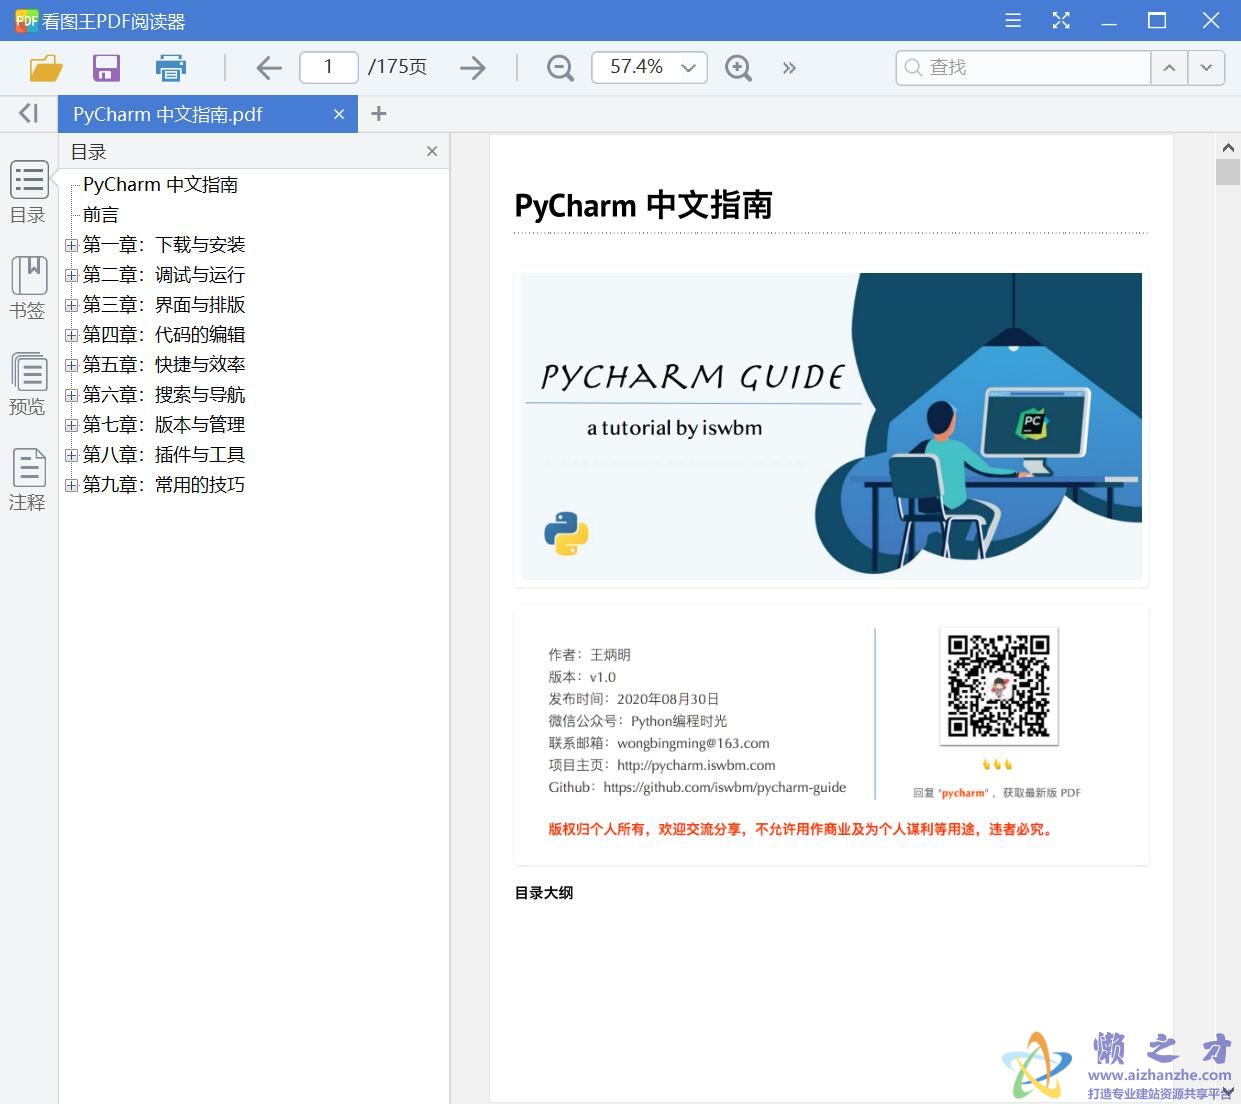 PyCharm 中文指南[PDF][HTML][46.83MB]